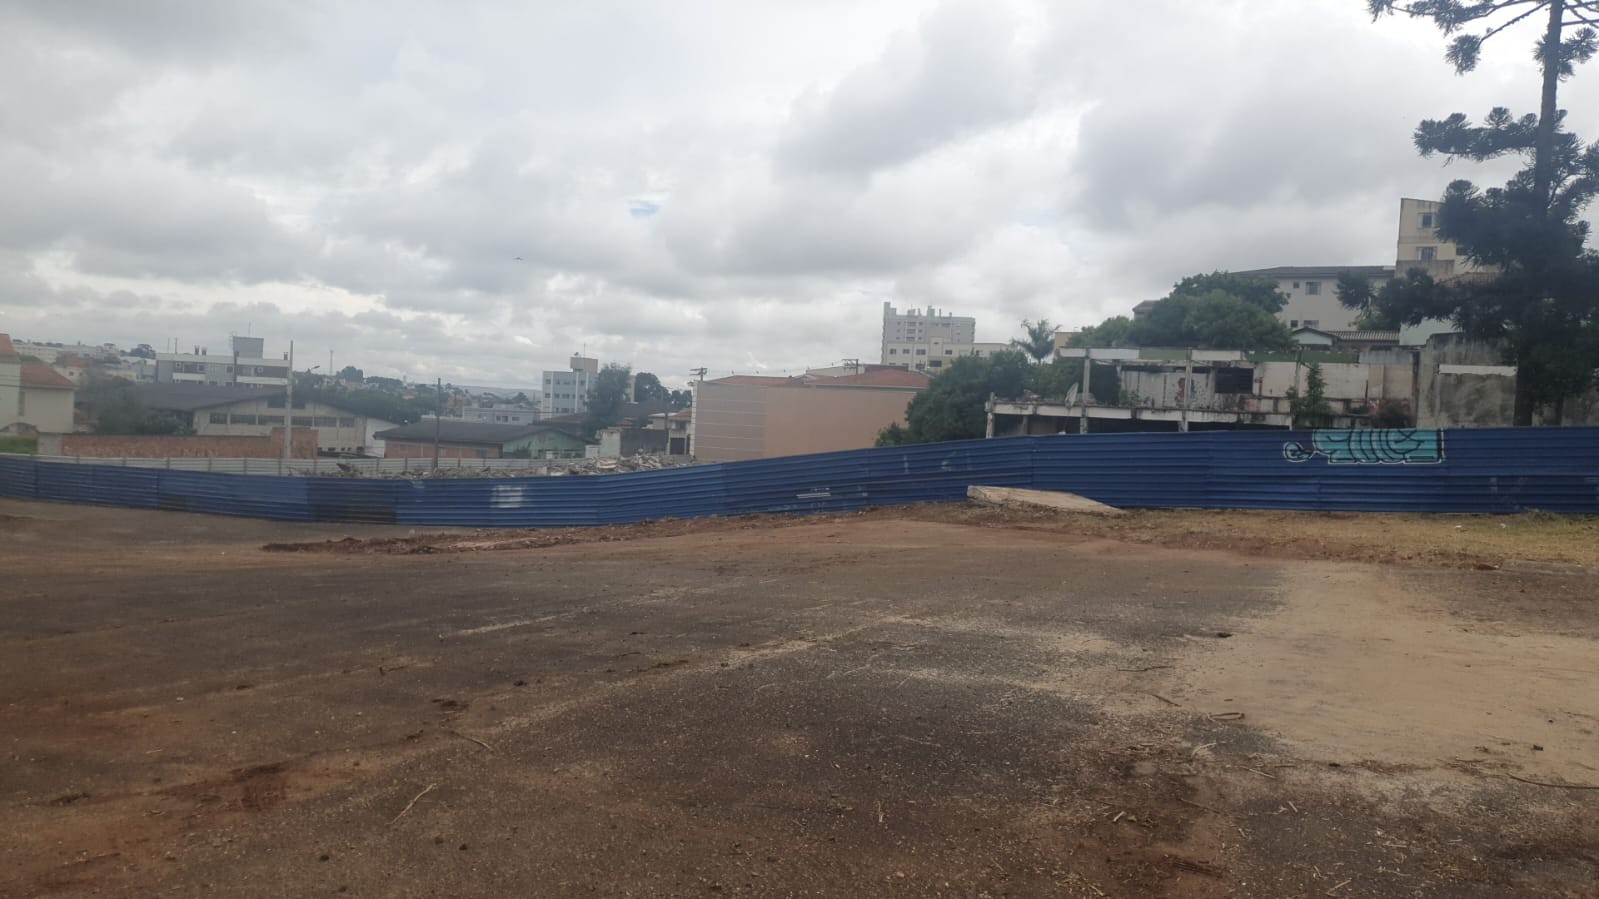 Terreno de Mercado Municipal de Ponta Grossa vai virar estacionamento provisório, diz prefeitura